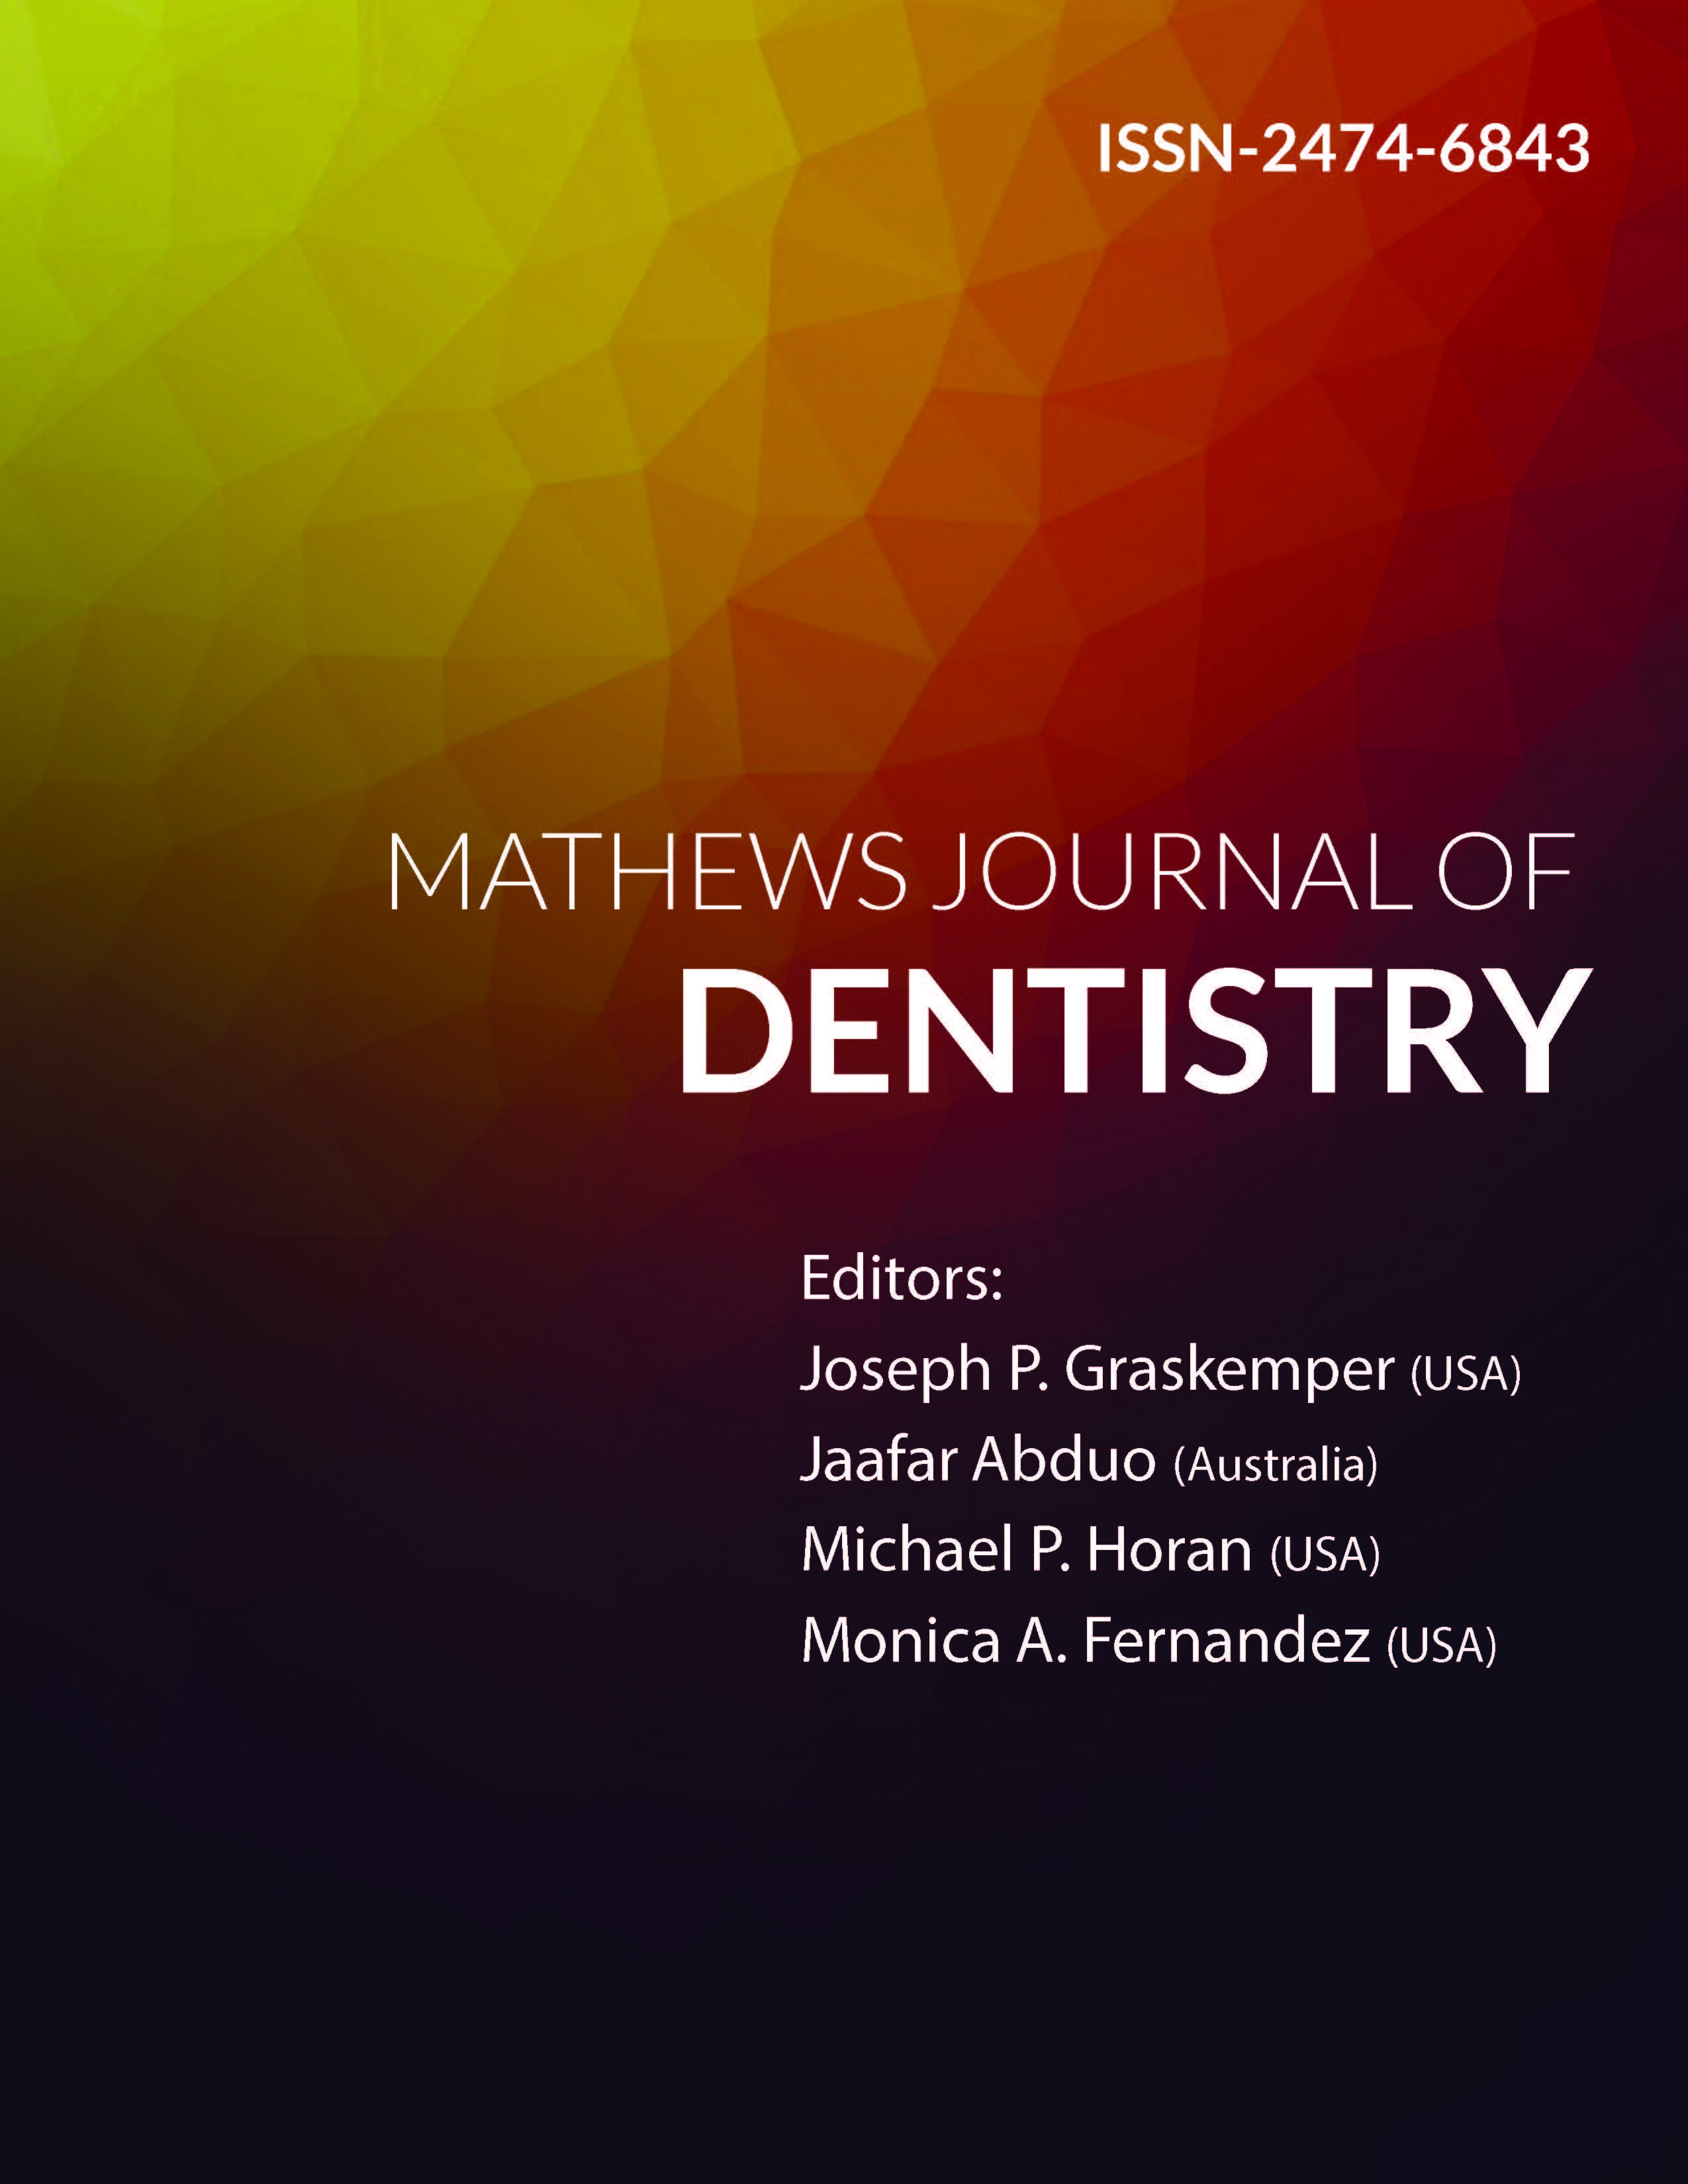 Mathews Journal of Dentistry